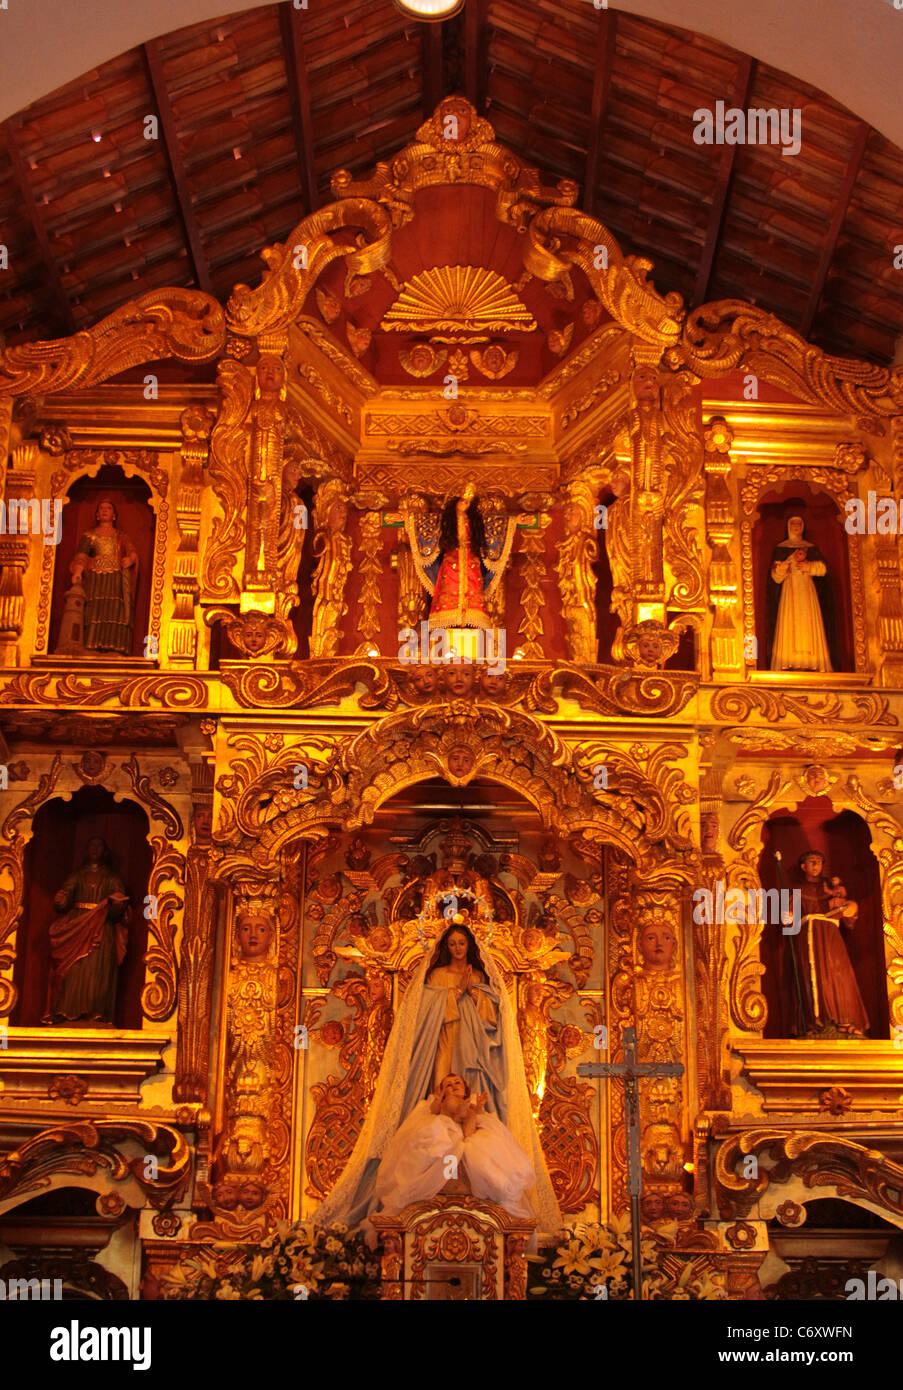 Altar of the Santa Librada Church, Las Tablas, Los Santos, Panama Stock Photo